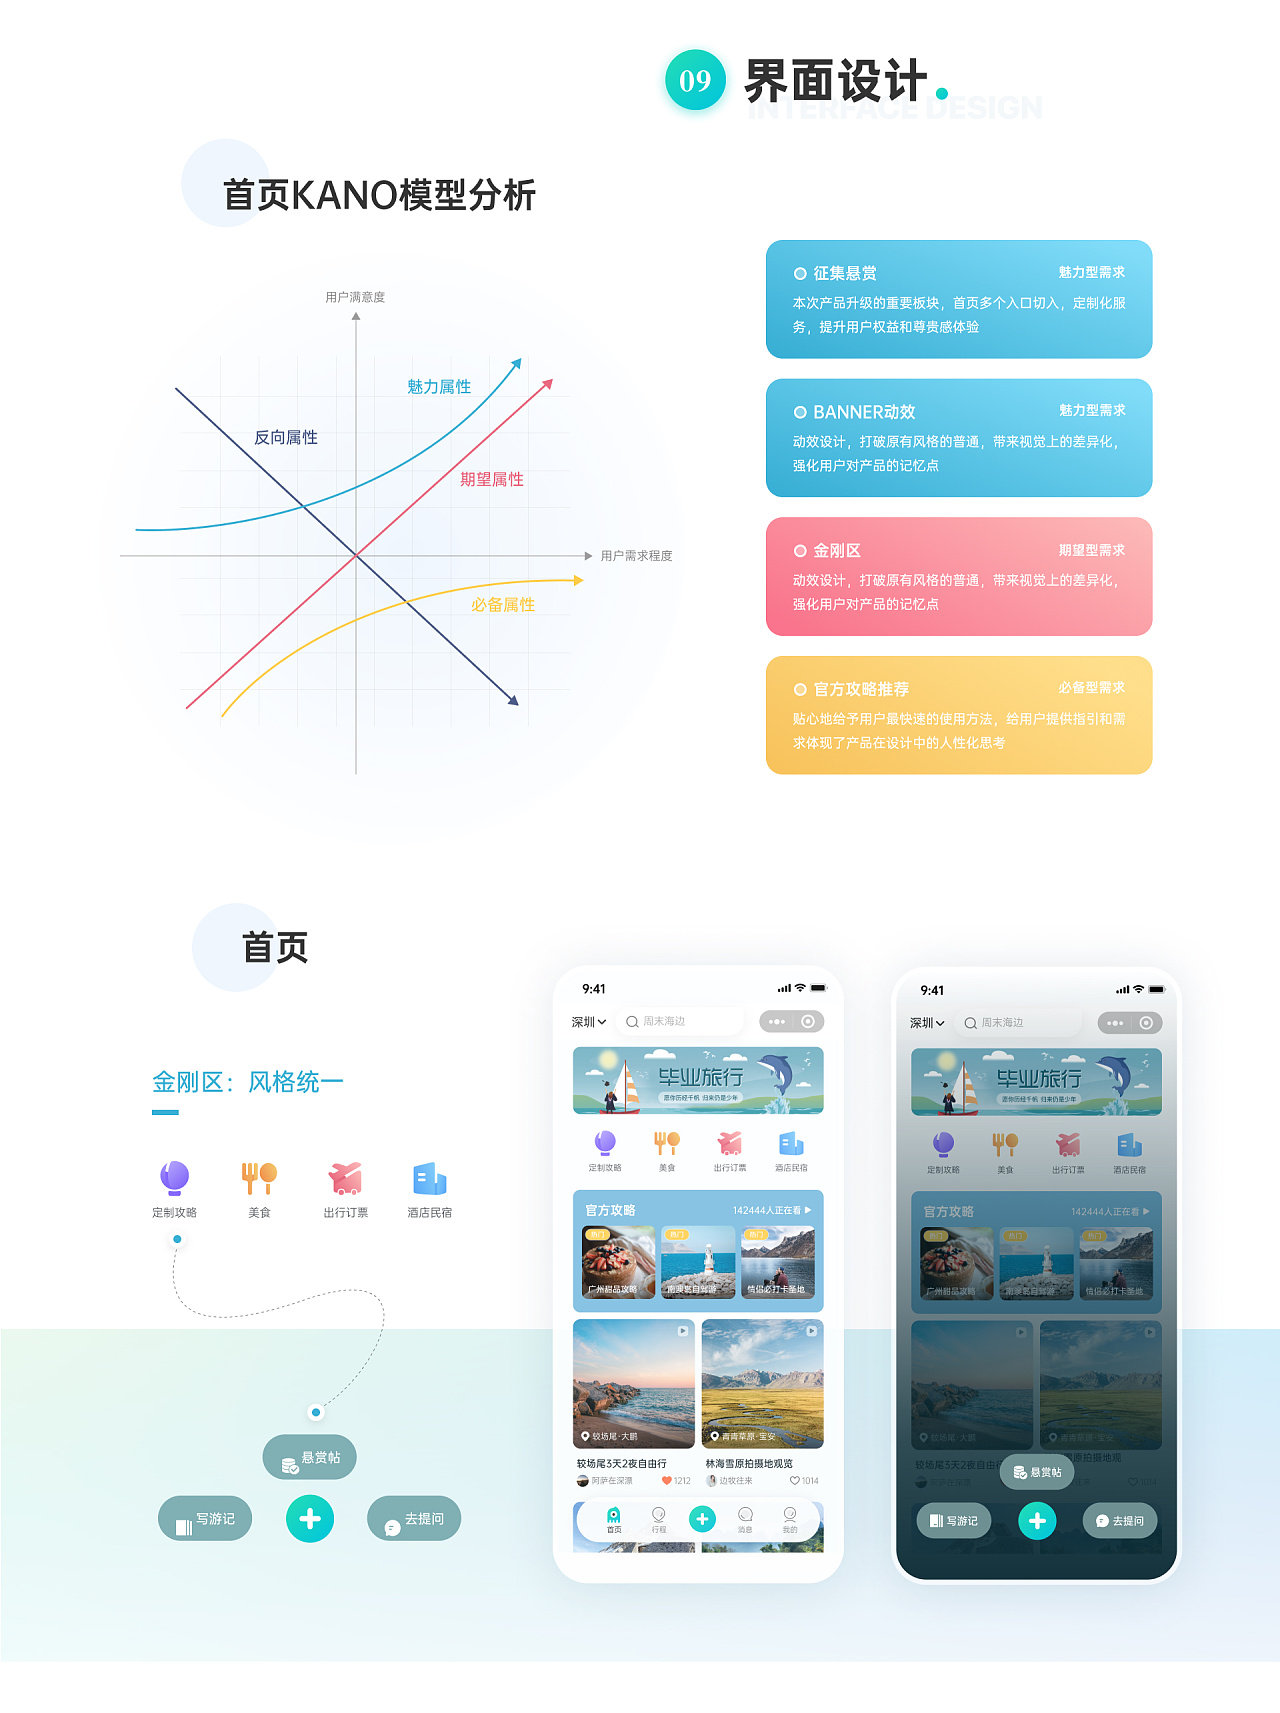 UI界面设计 | 出发吧 旅游小程序&动效 升级改版